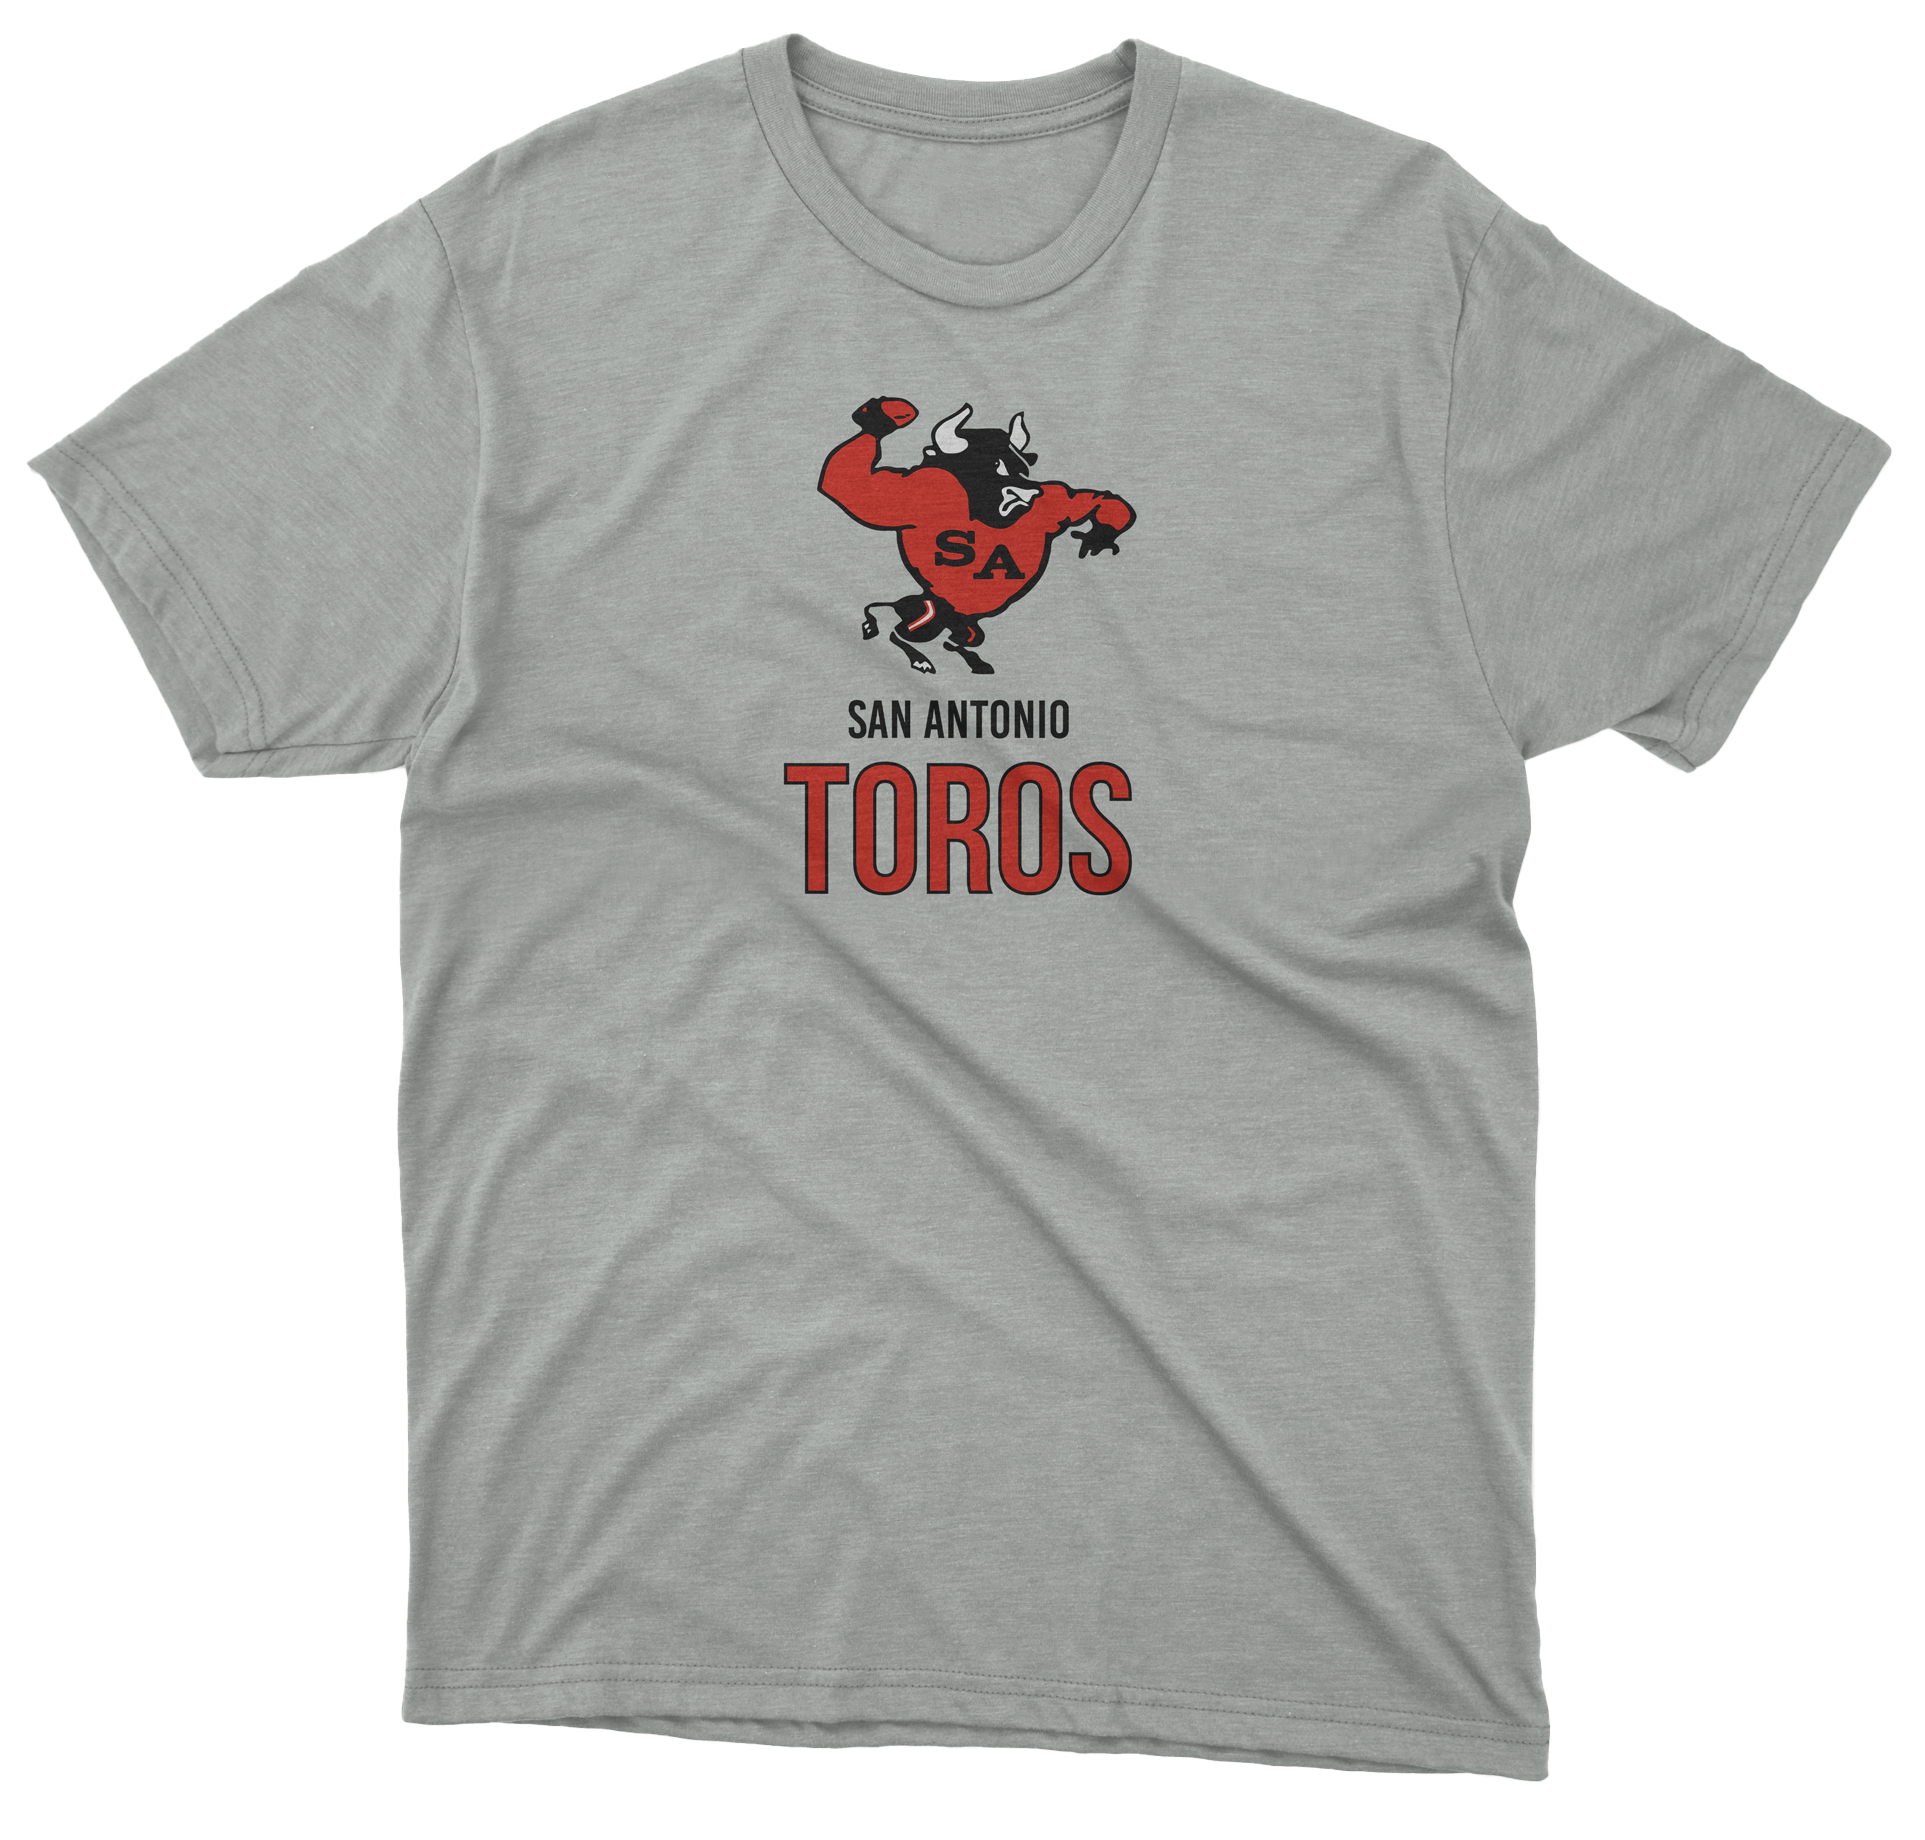 San Antonio Toros T-shirt record